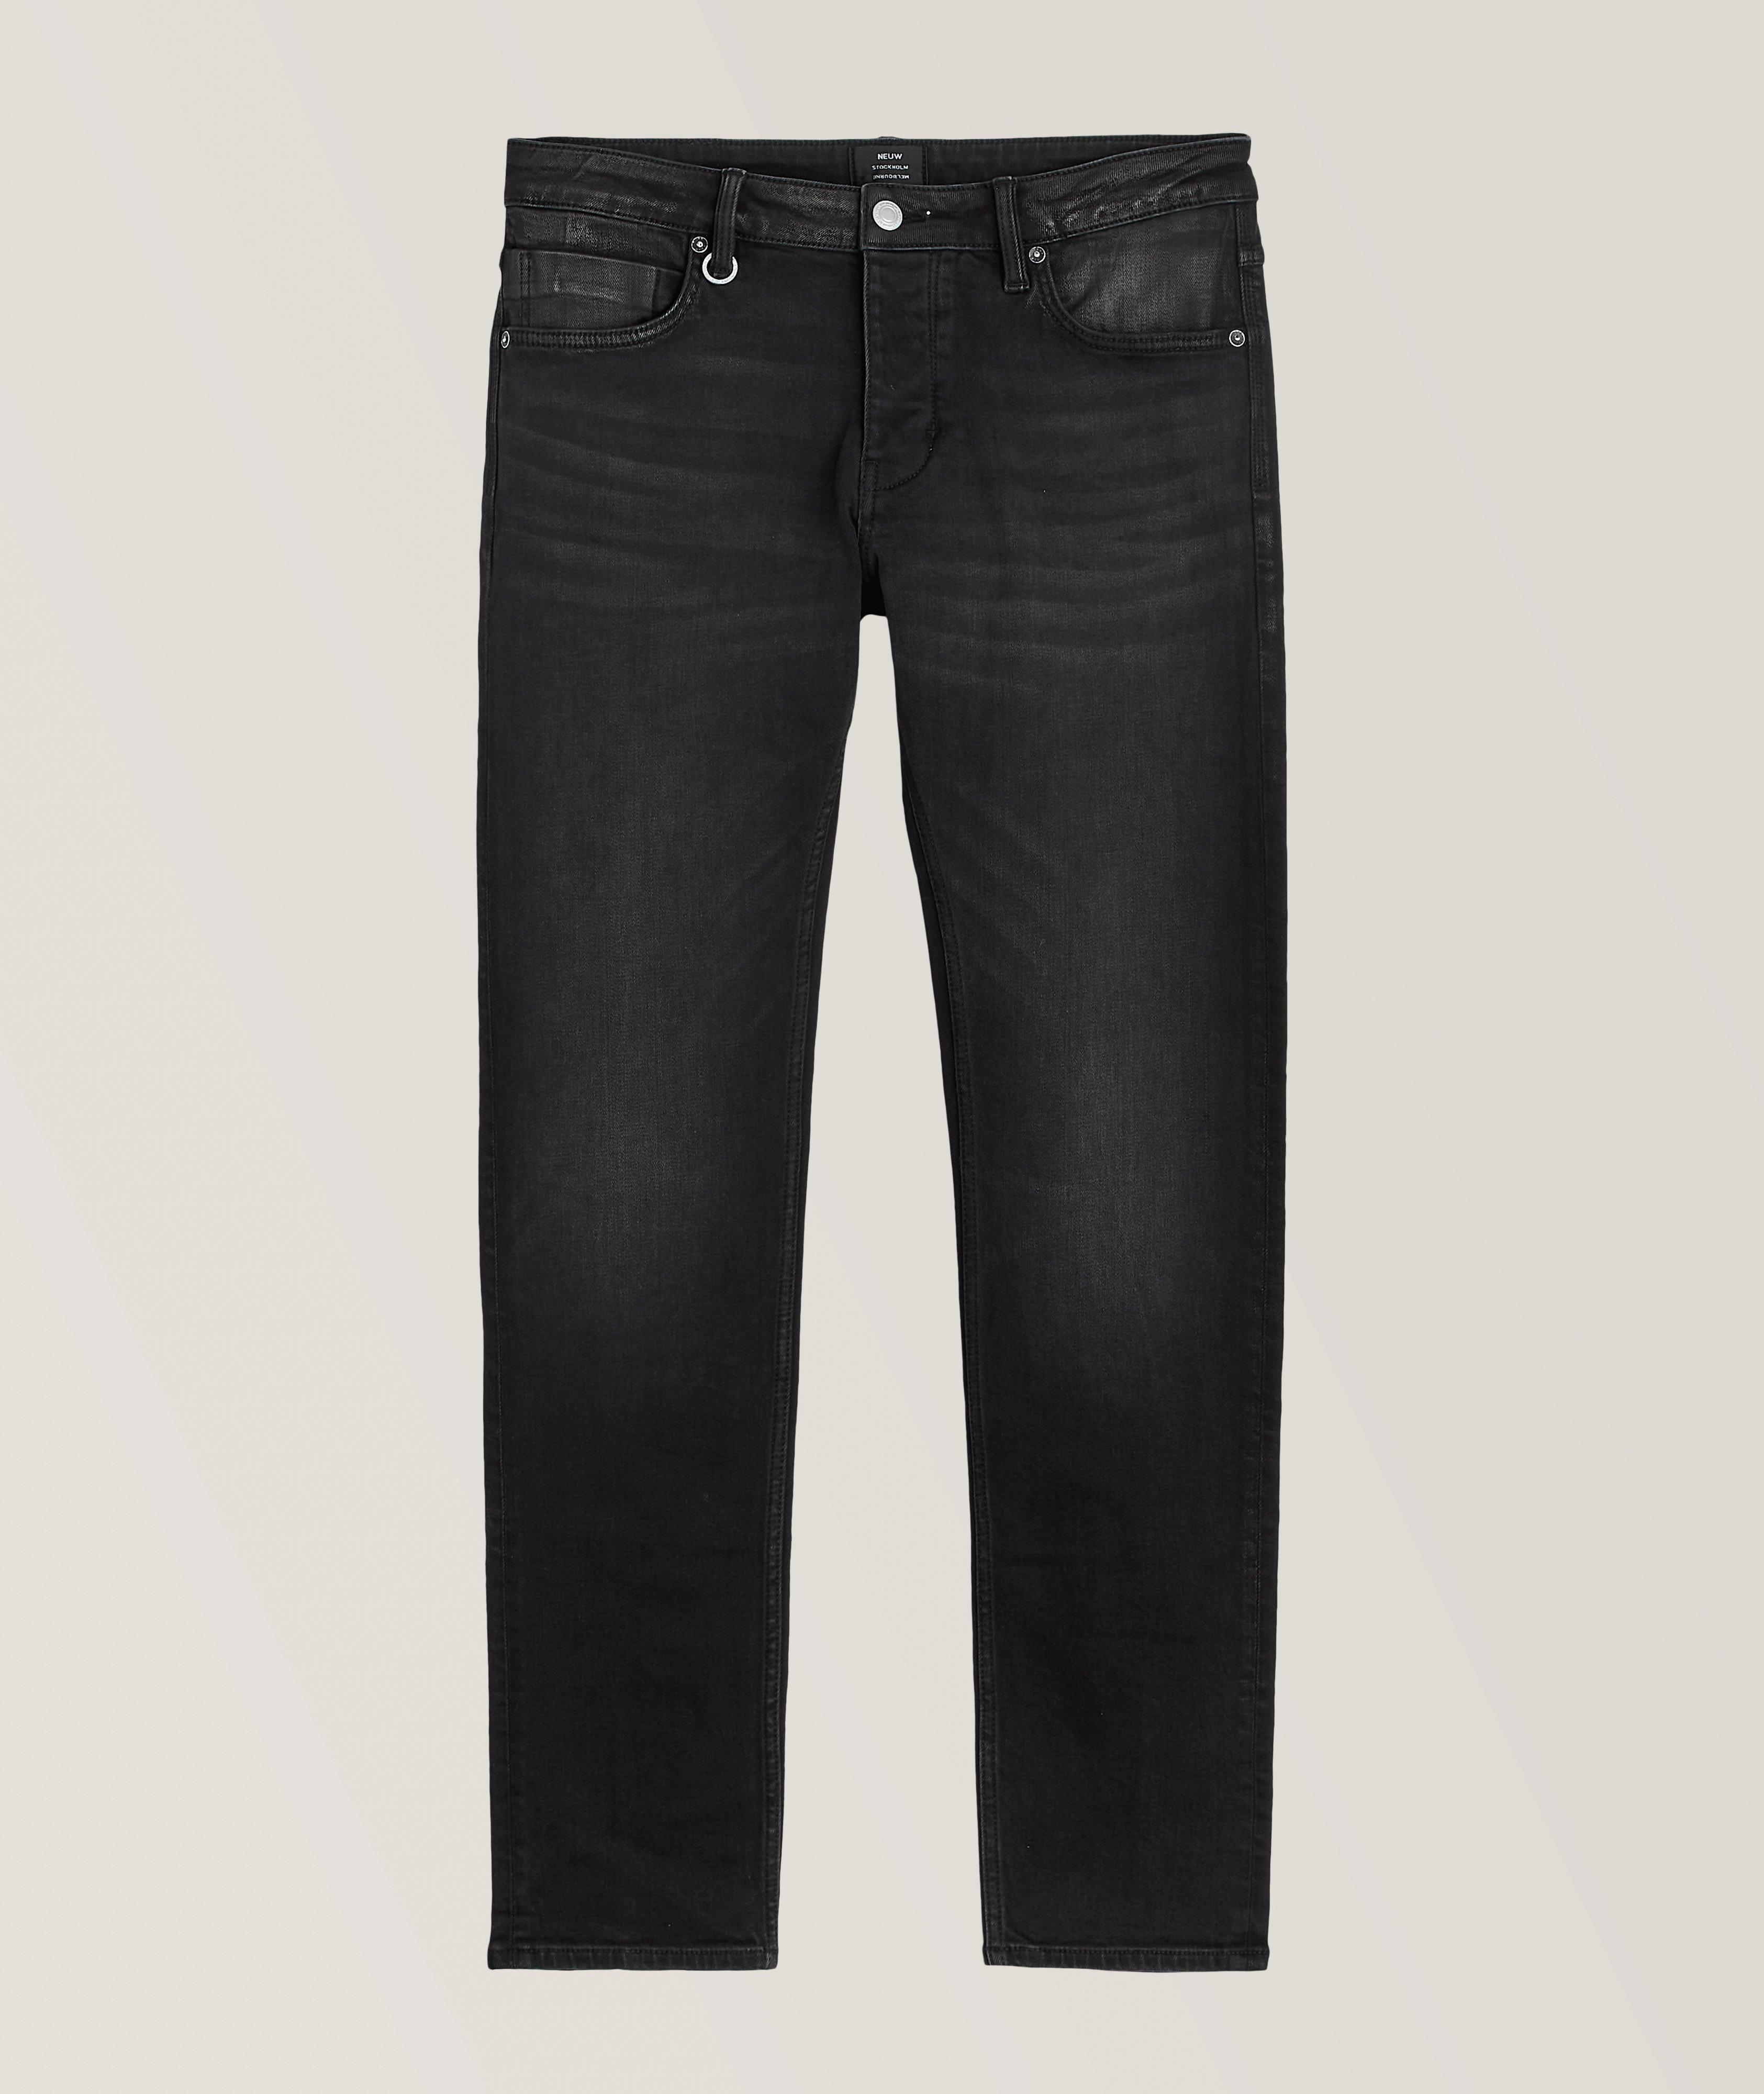 Iggy Skinny Distressed Stretch-Cotton Jeans image 0